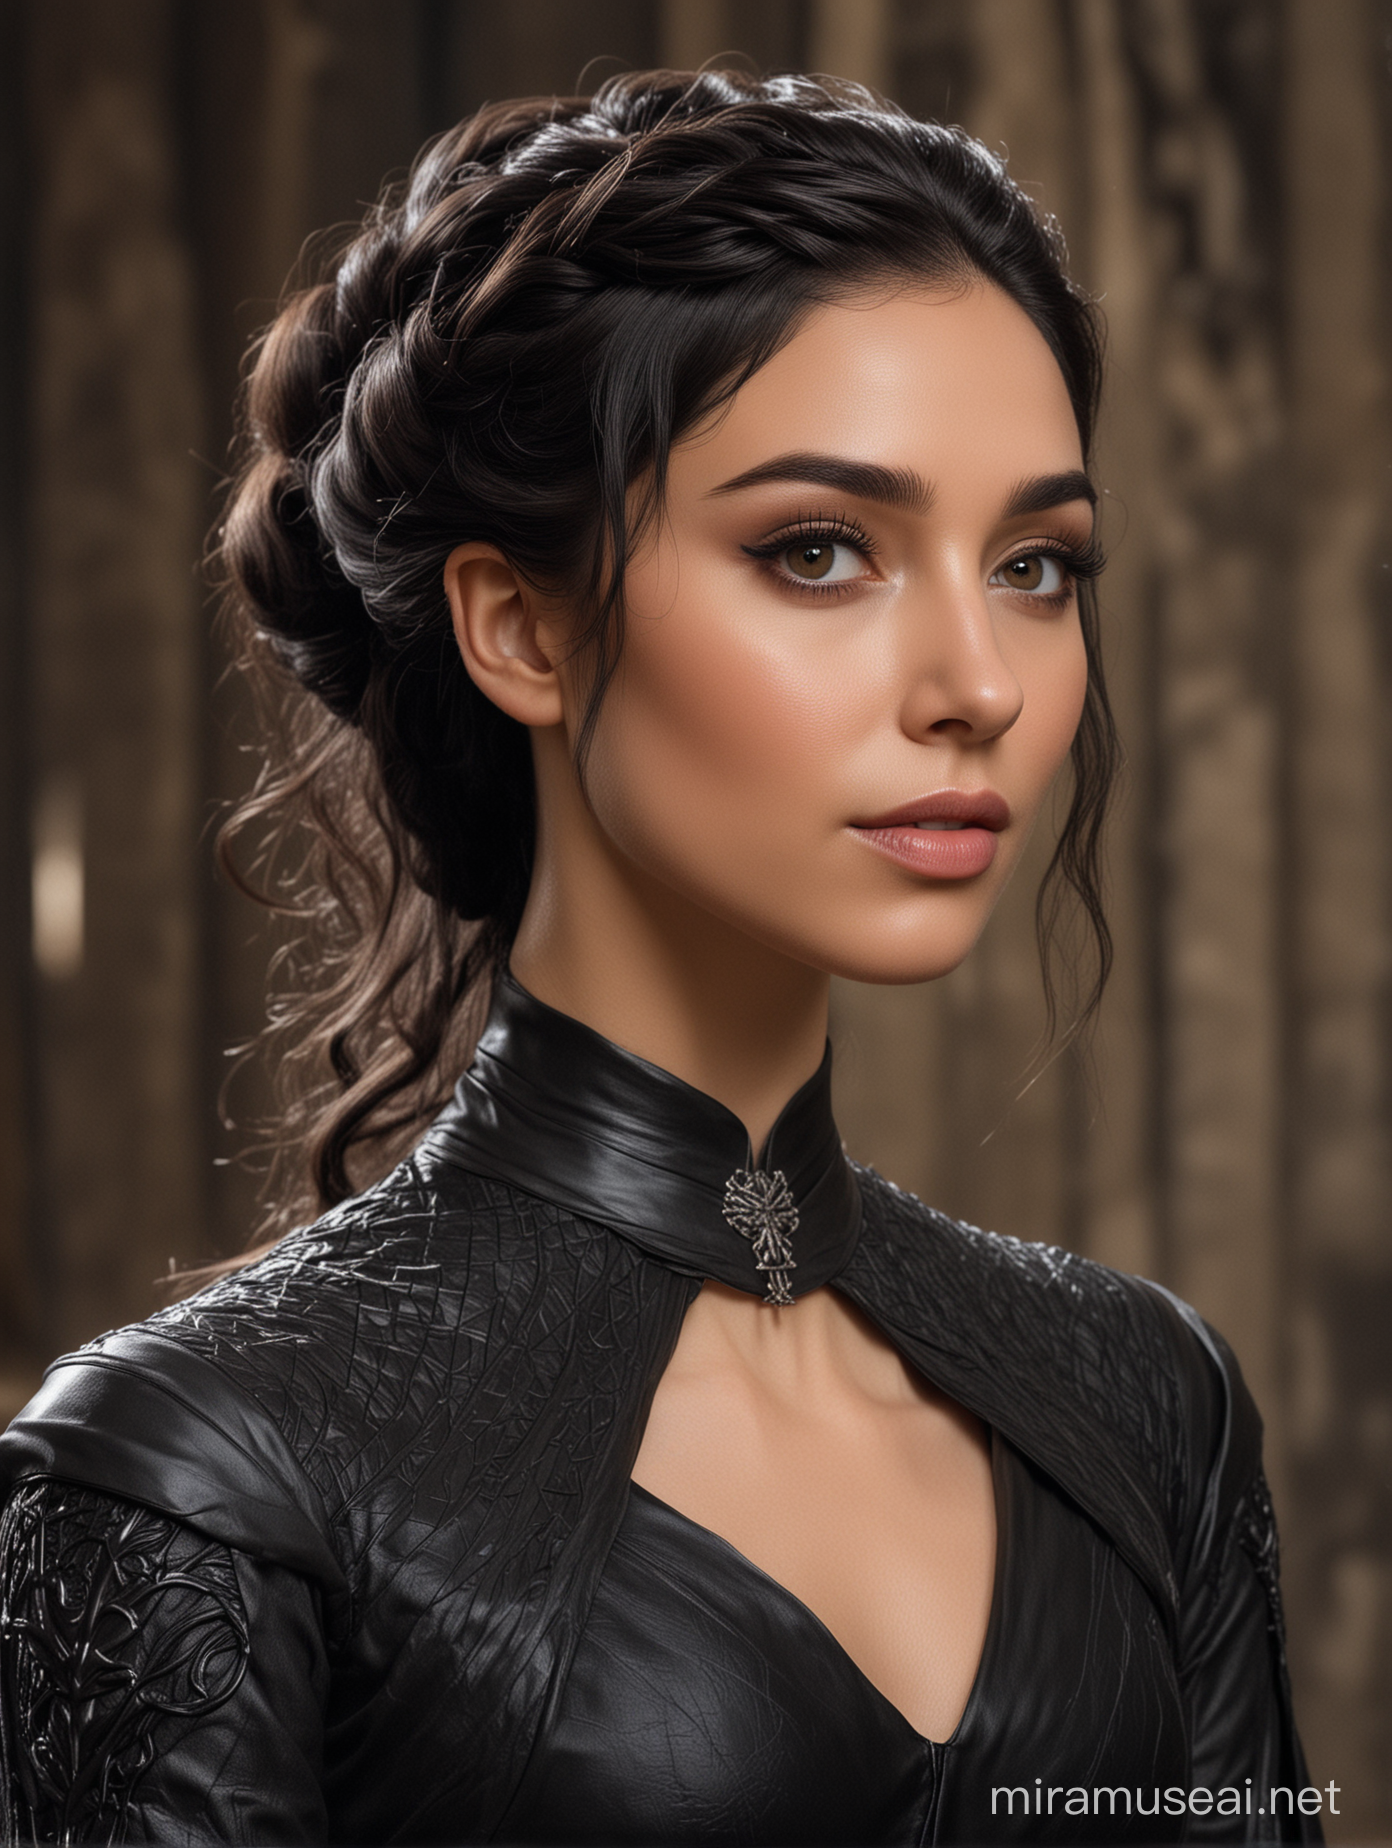 Valyrian woman, black valyrian style hair, cured skin, black valyrian style dress 